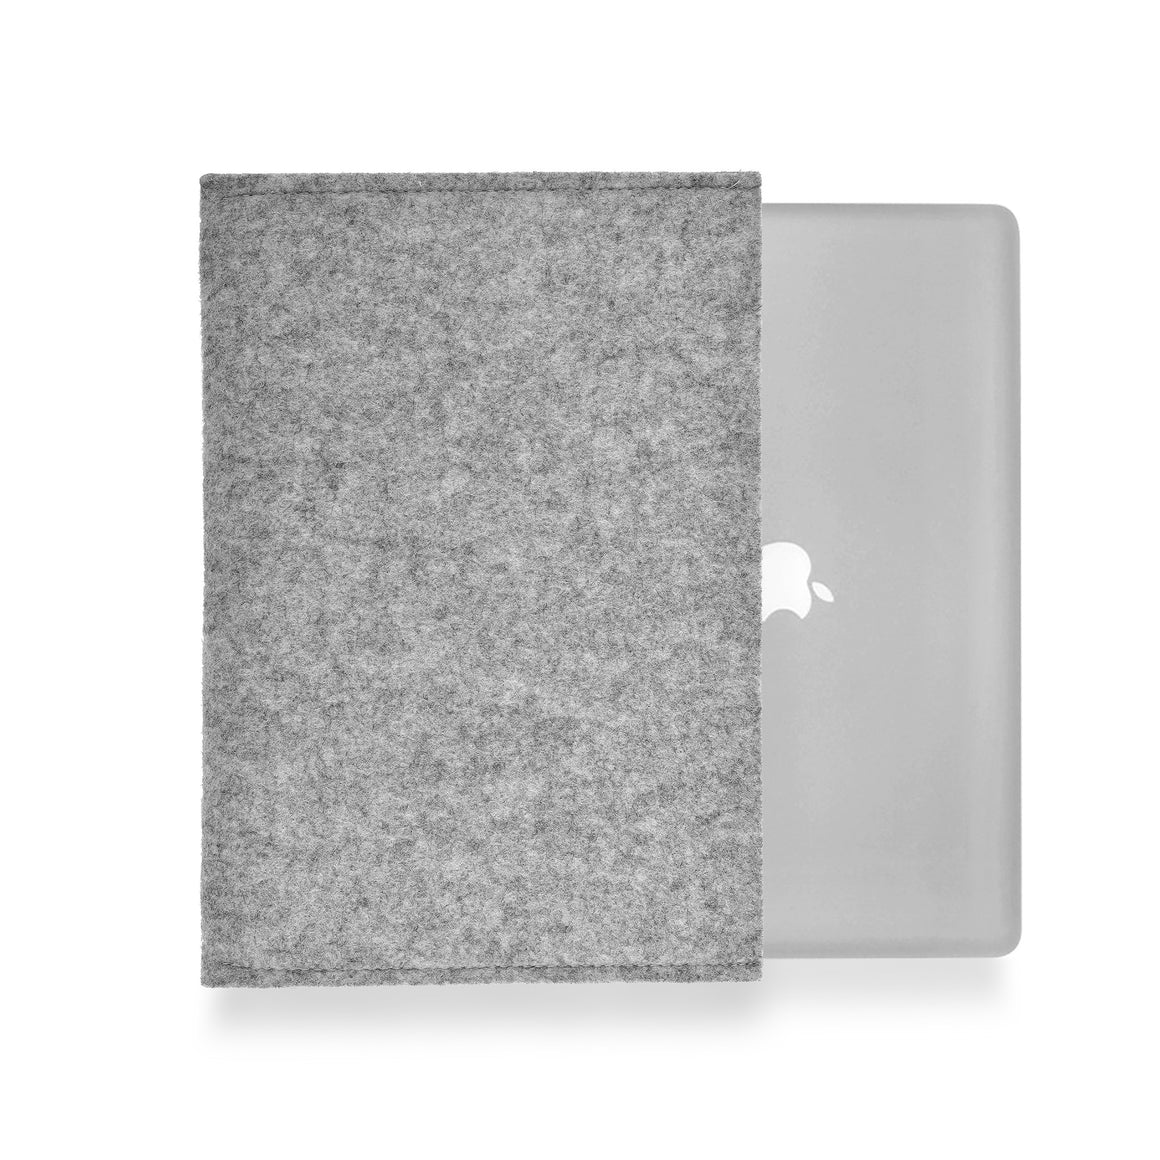 MacBook Air 13 inch Wool Felt Grey Landscape - Wrappers UK